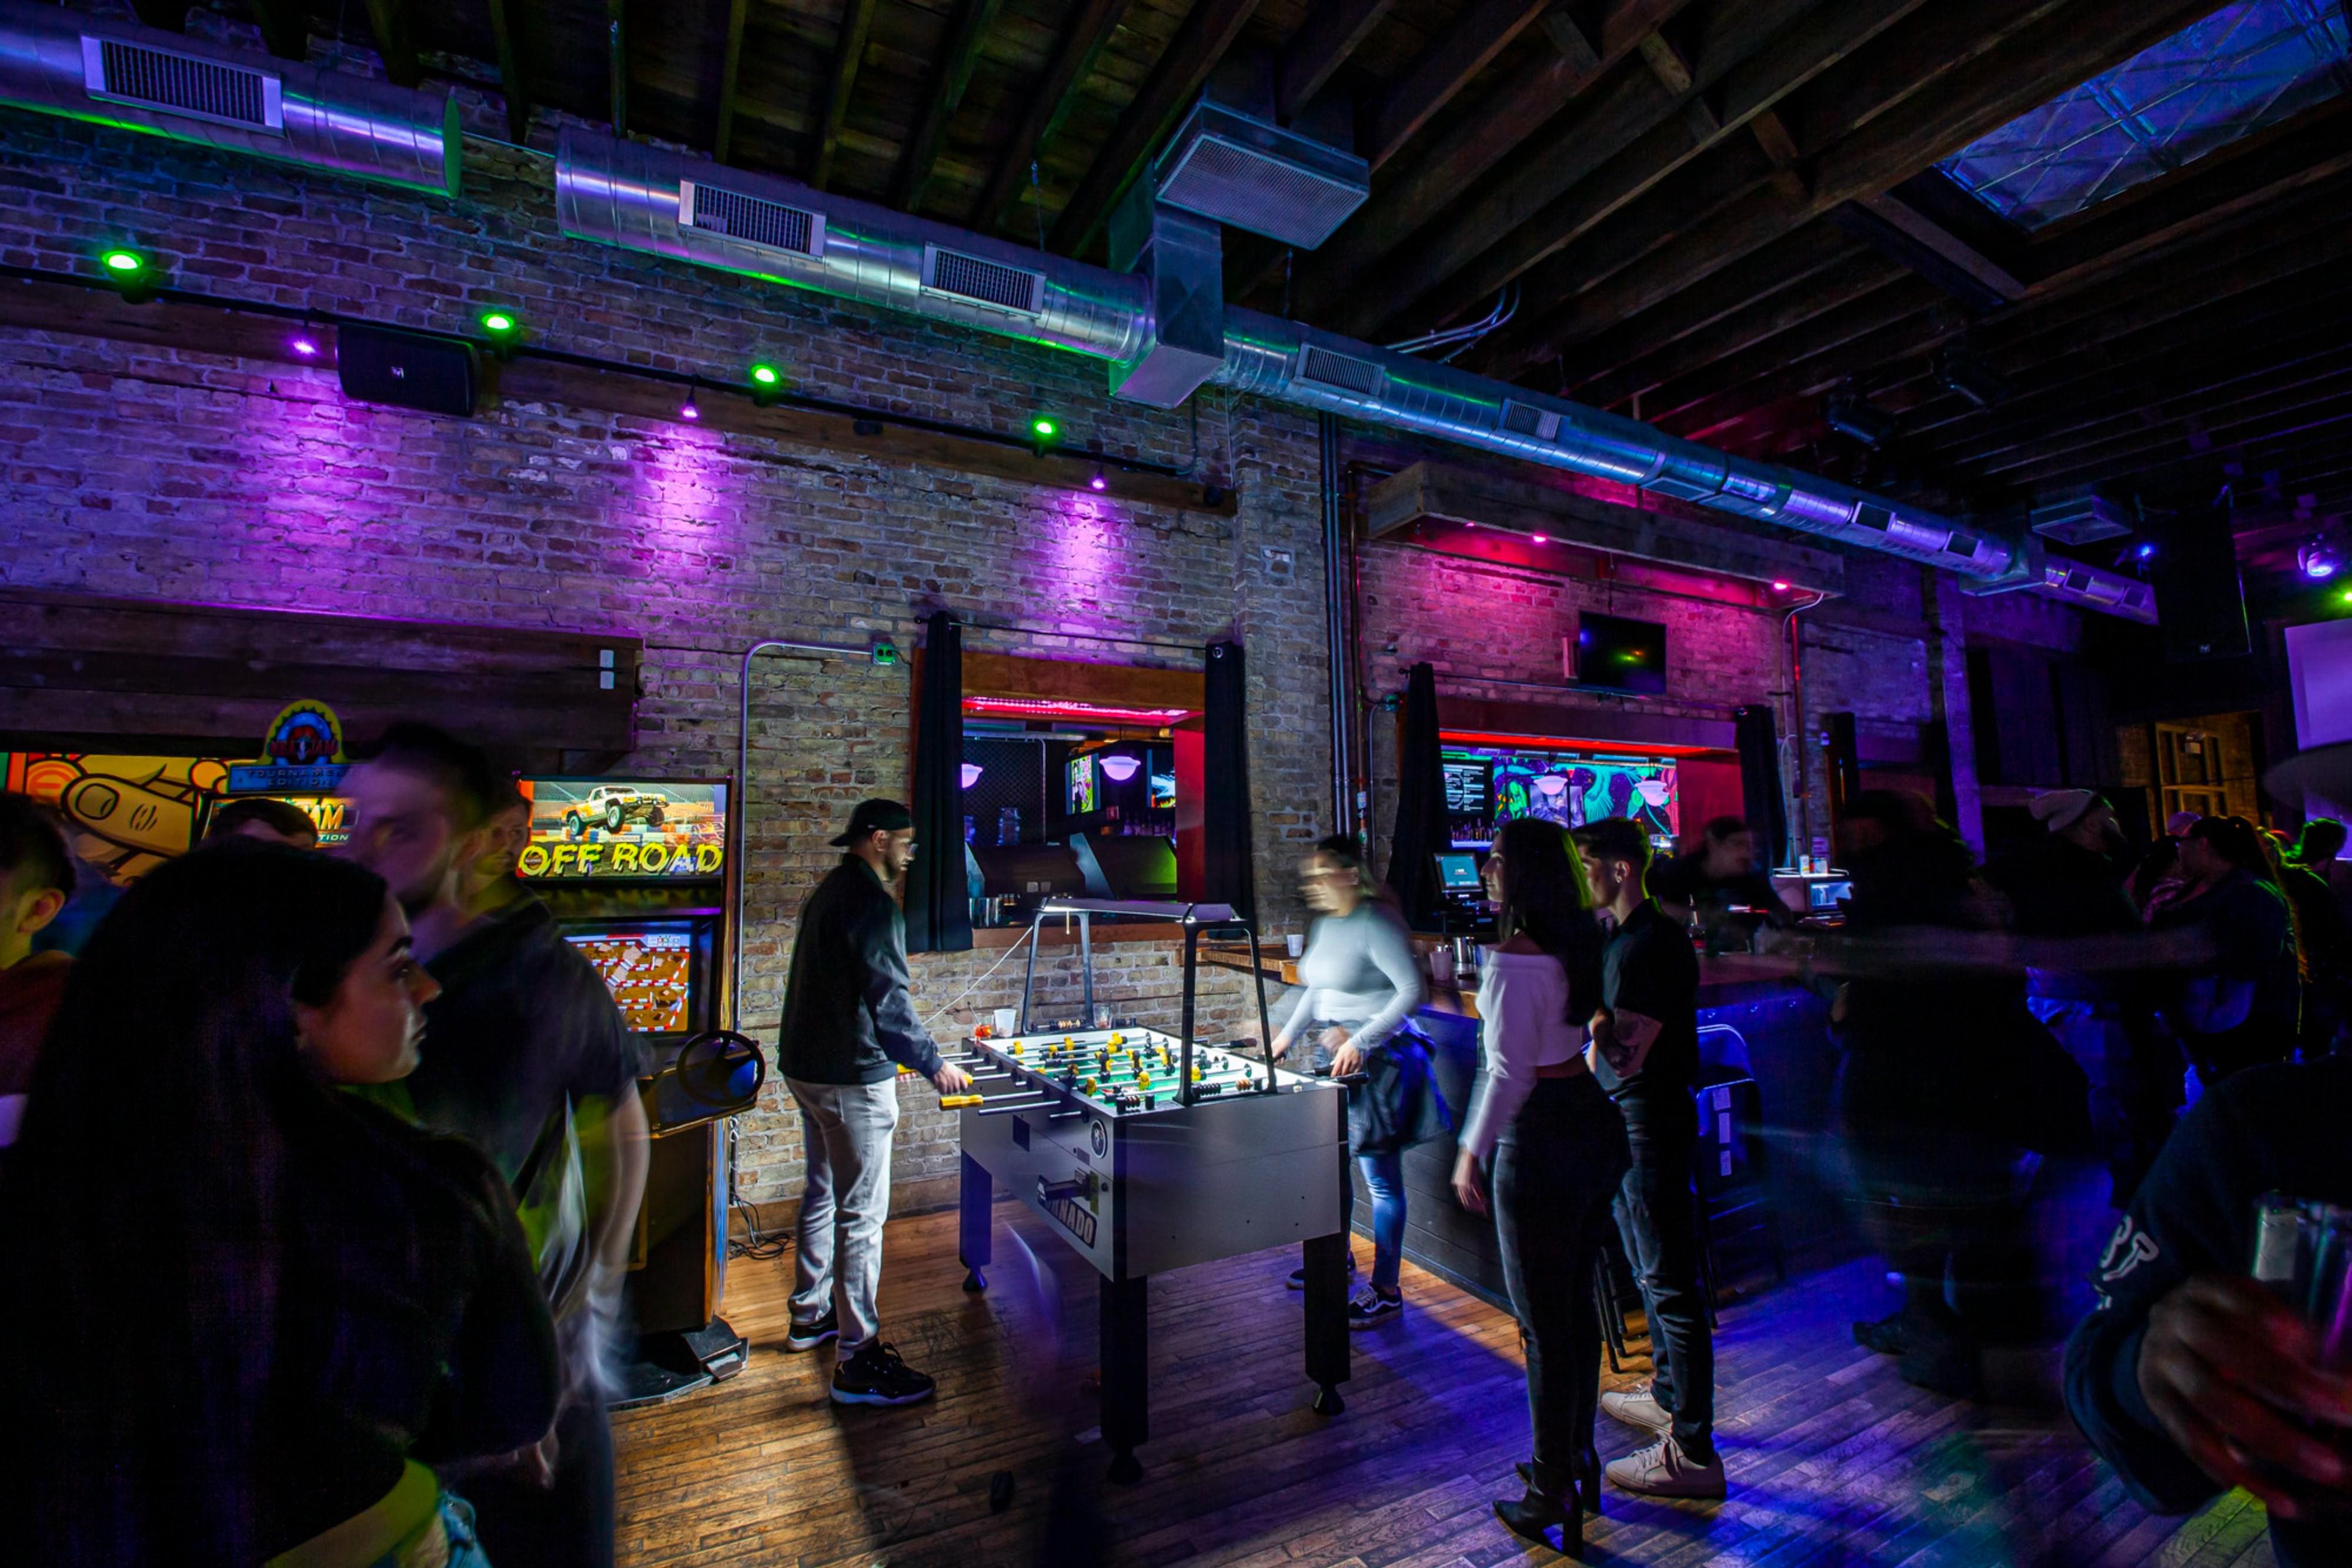 Emporium Arcade Bar